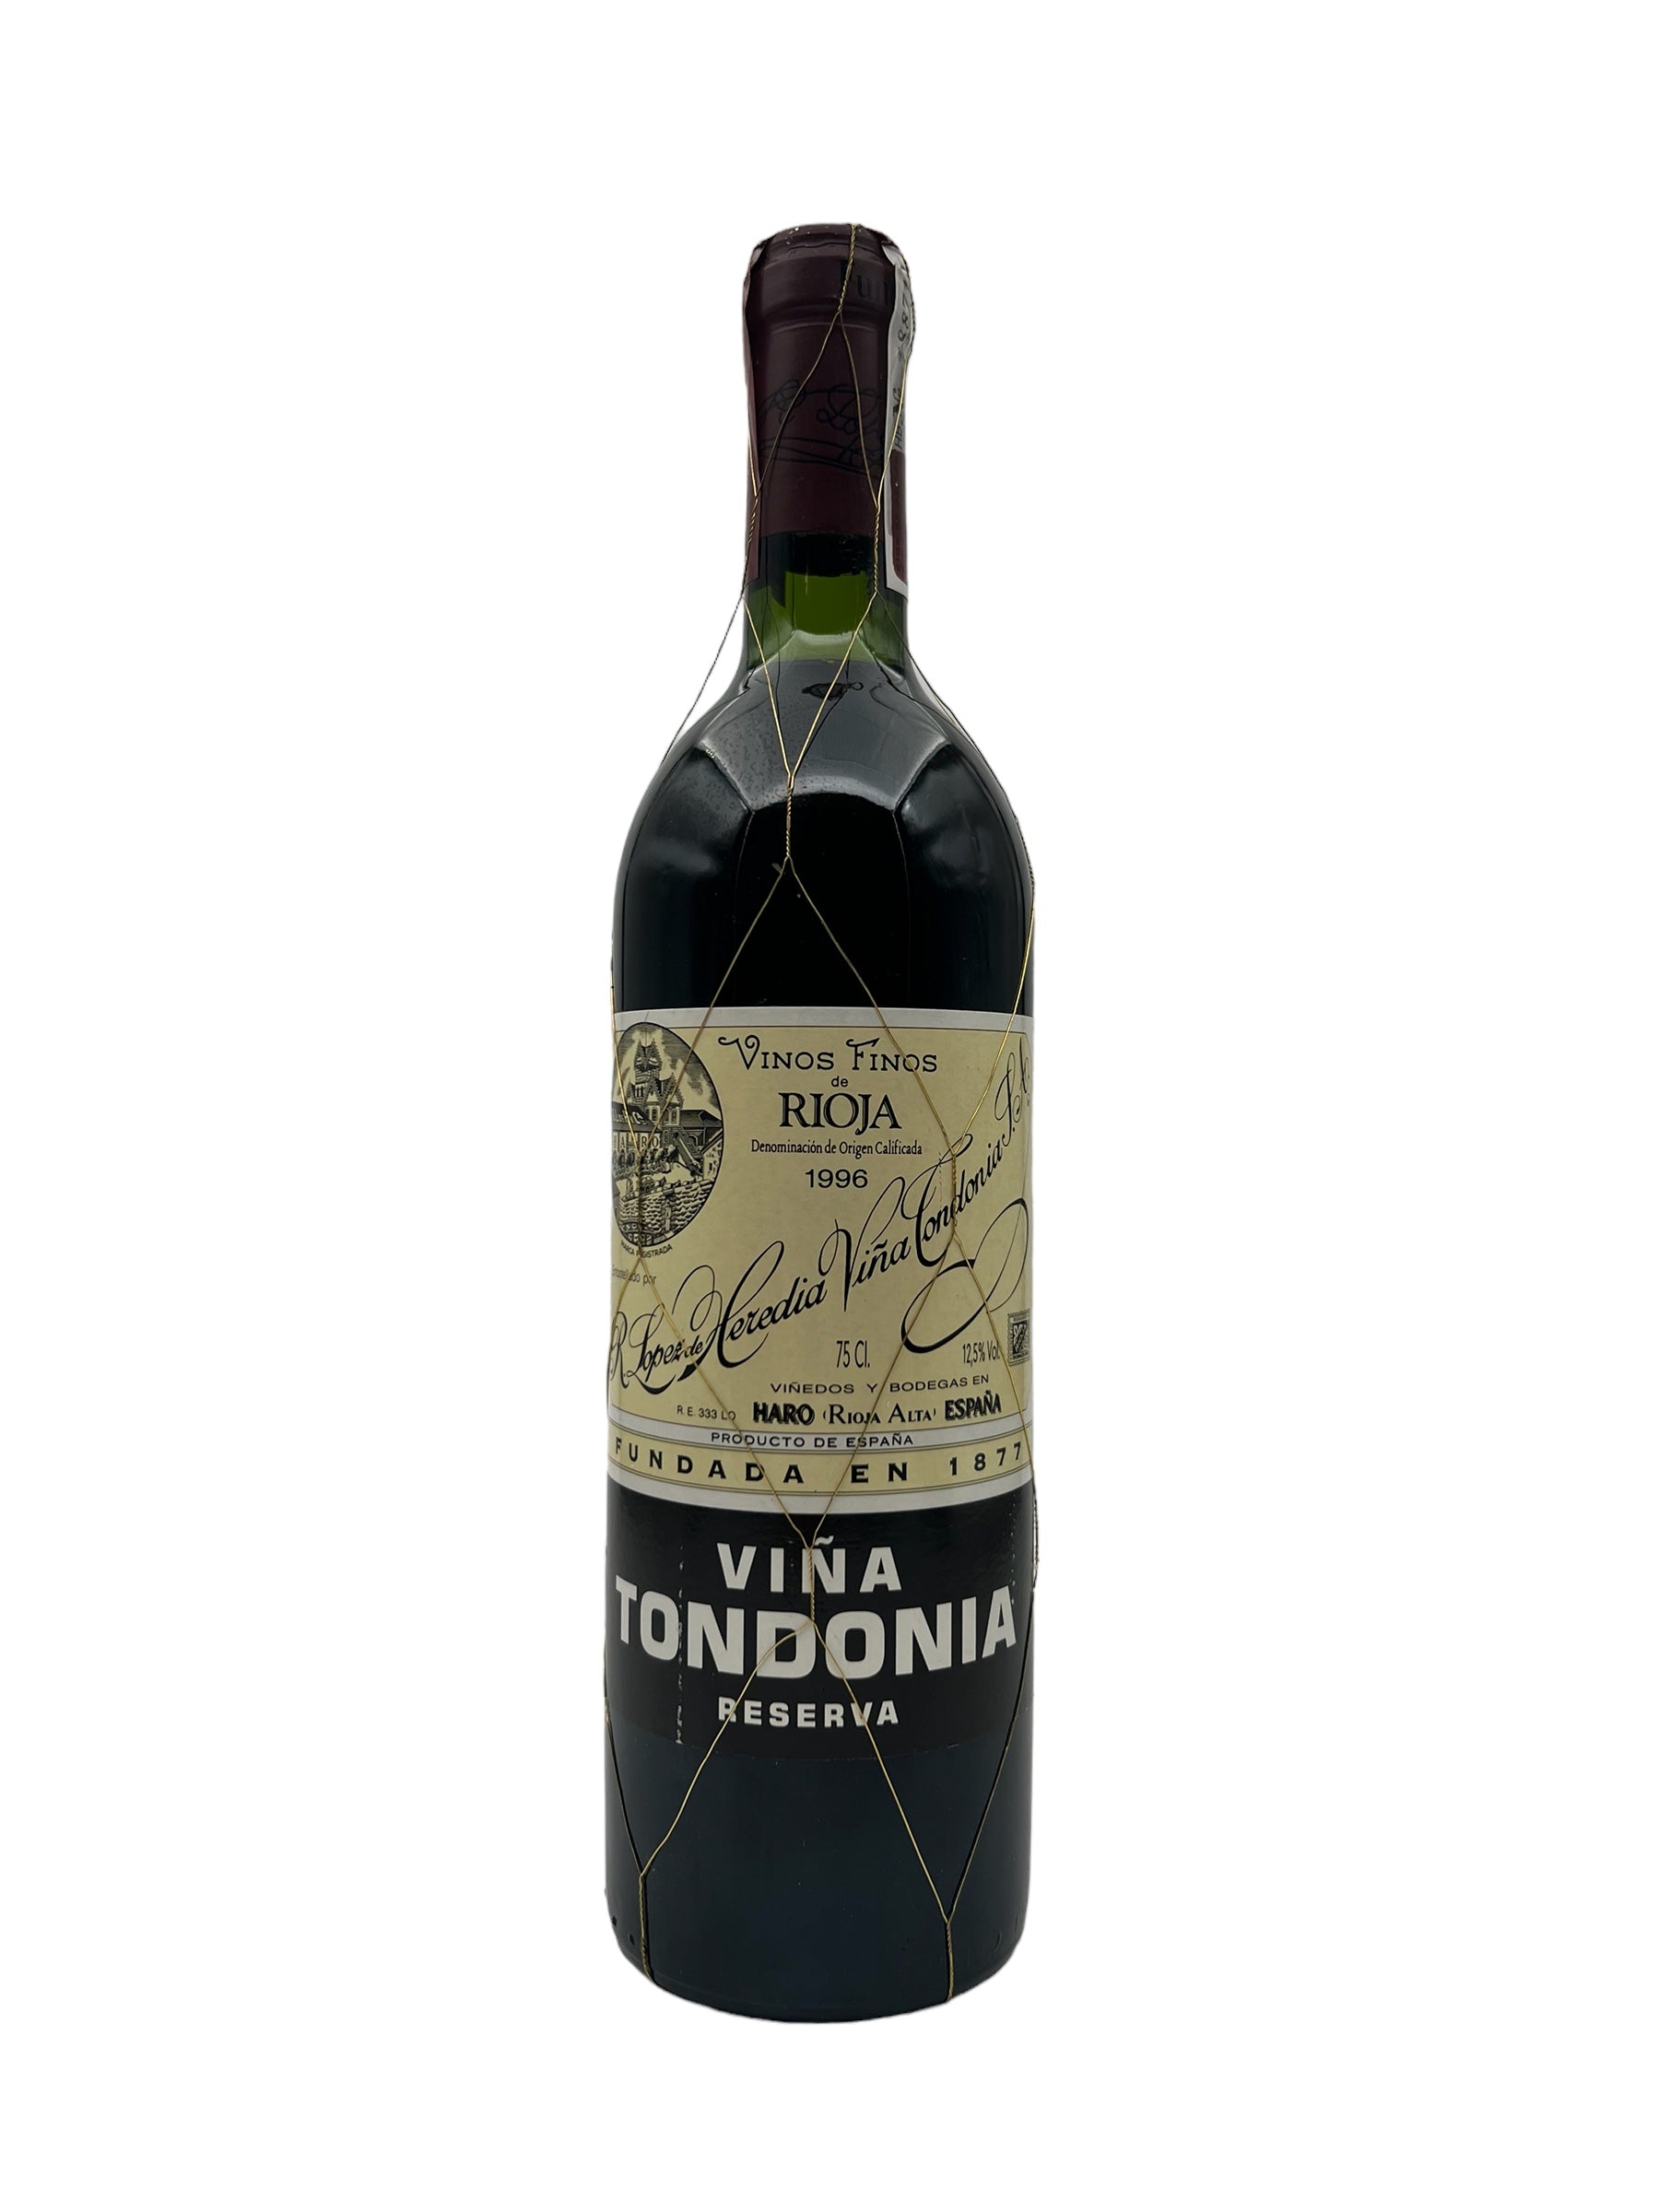 Billede af Rioja Viña Tondonia 1996 Reserva